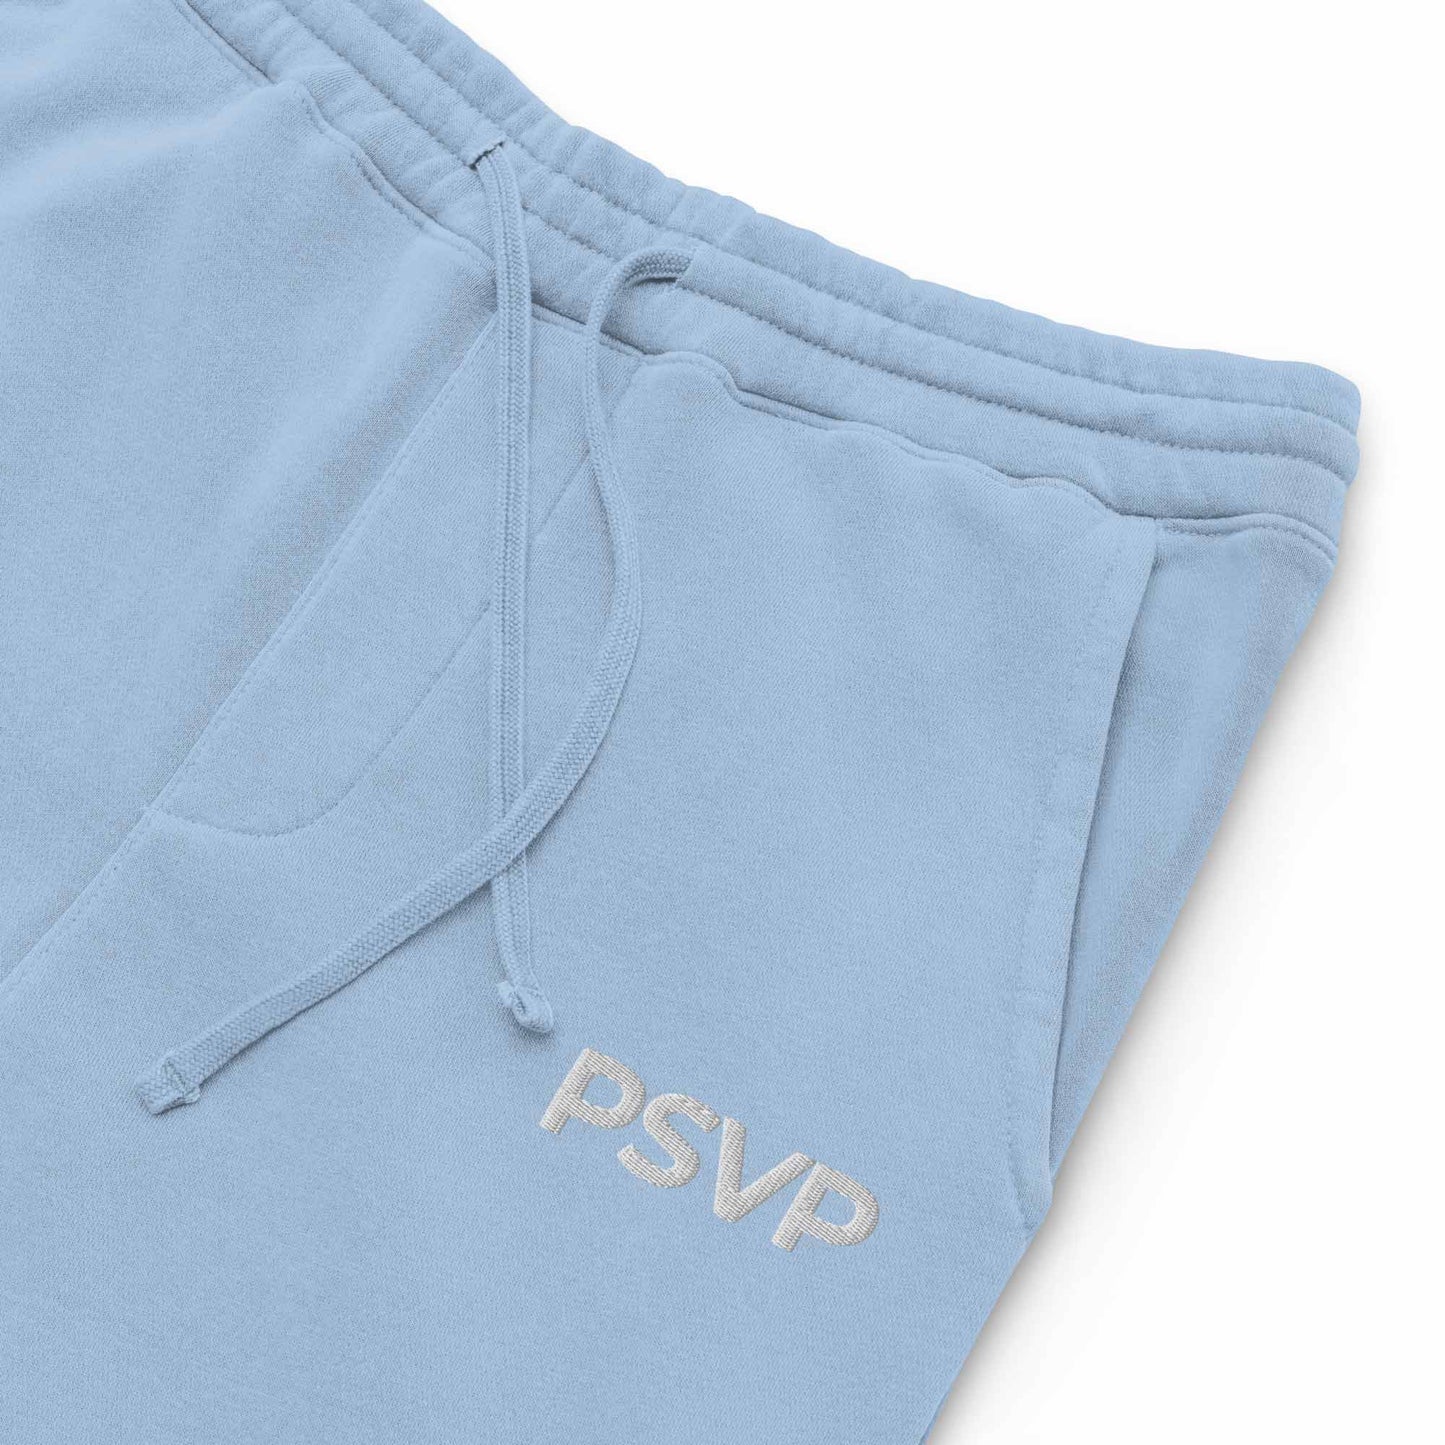 PSVP Pigment-Dyed Light Blue Sweatpants - Embroidery | Sweatpants | PARADIS SVP